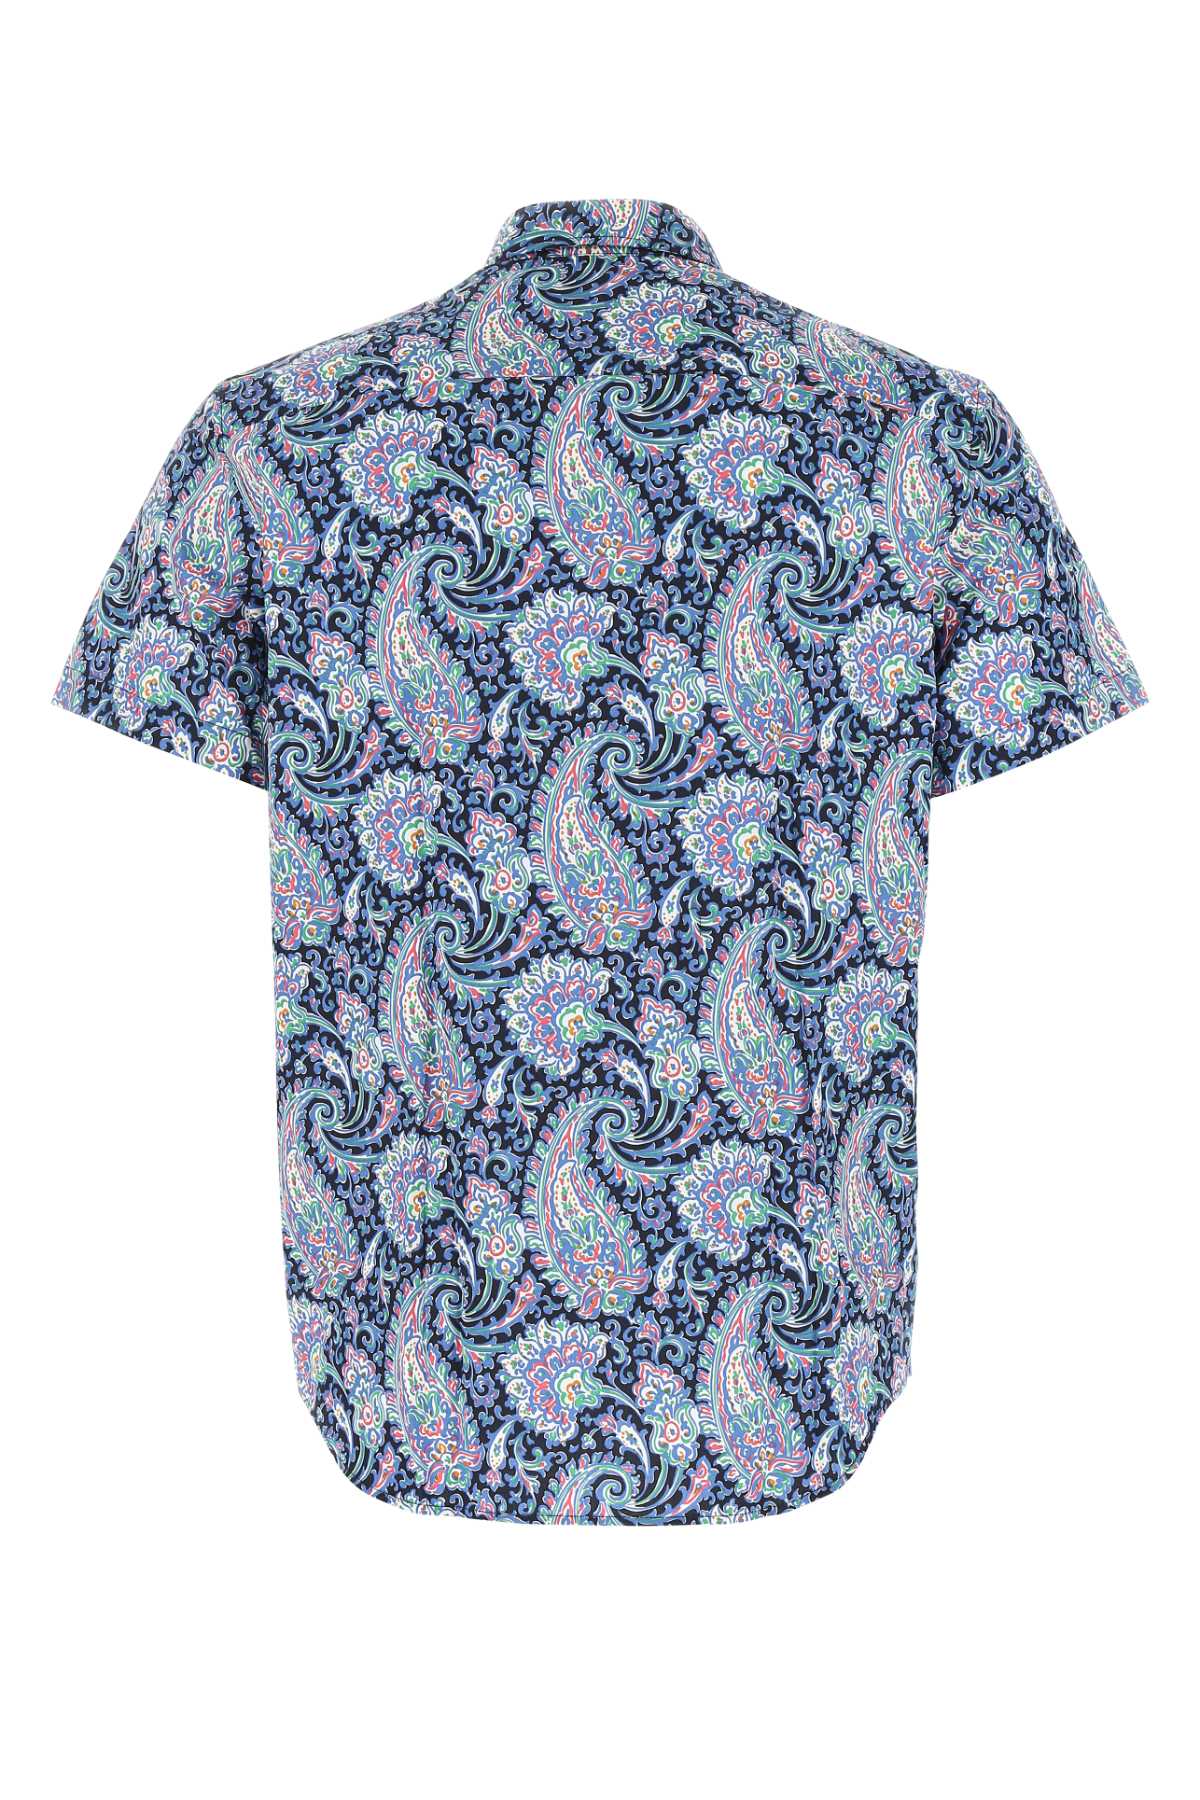 Apc Printed Cotton Jim Shirt In Blue